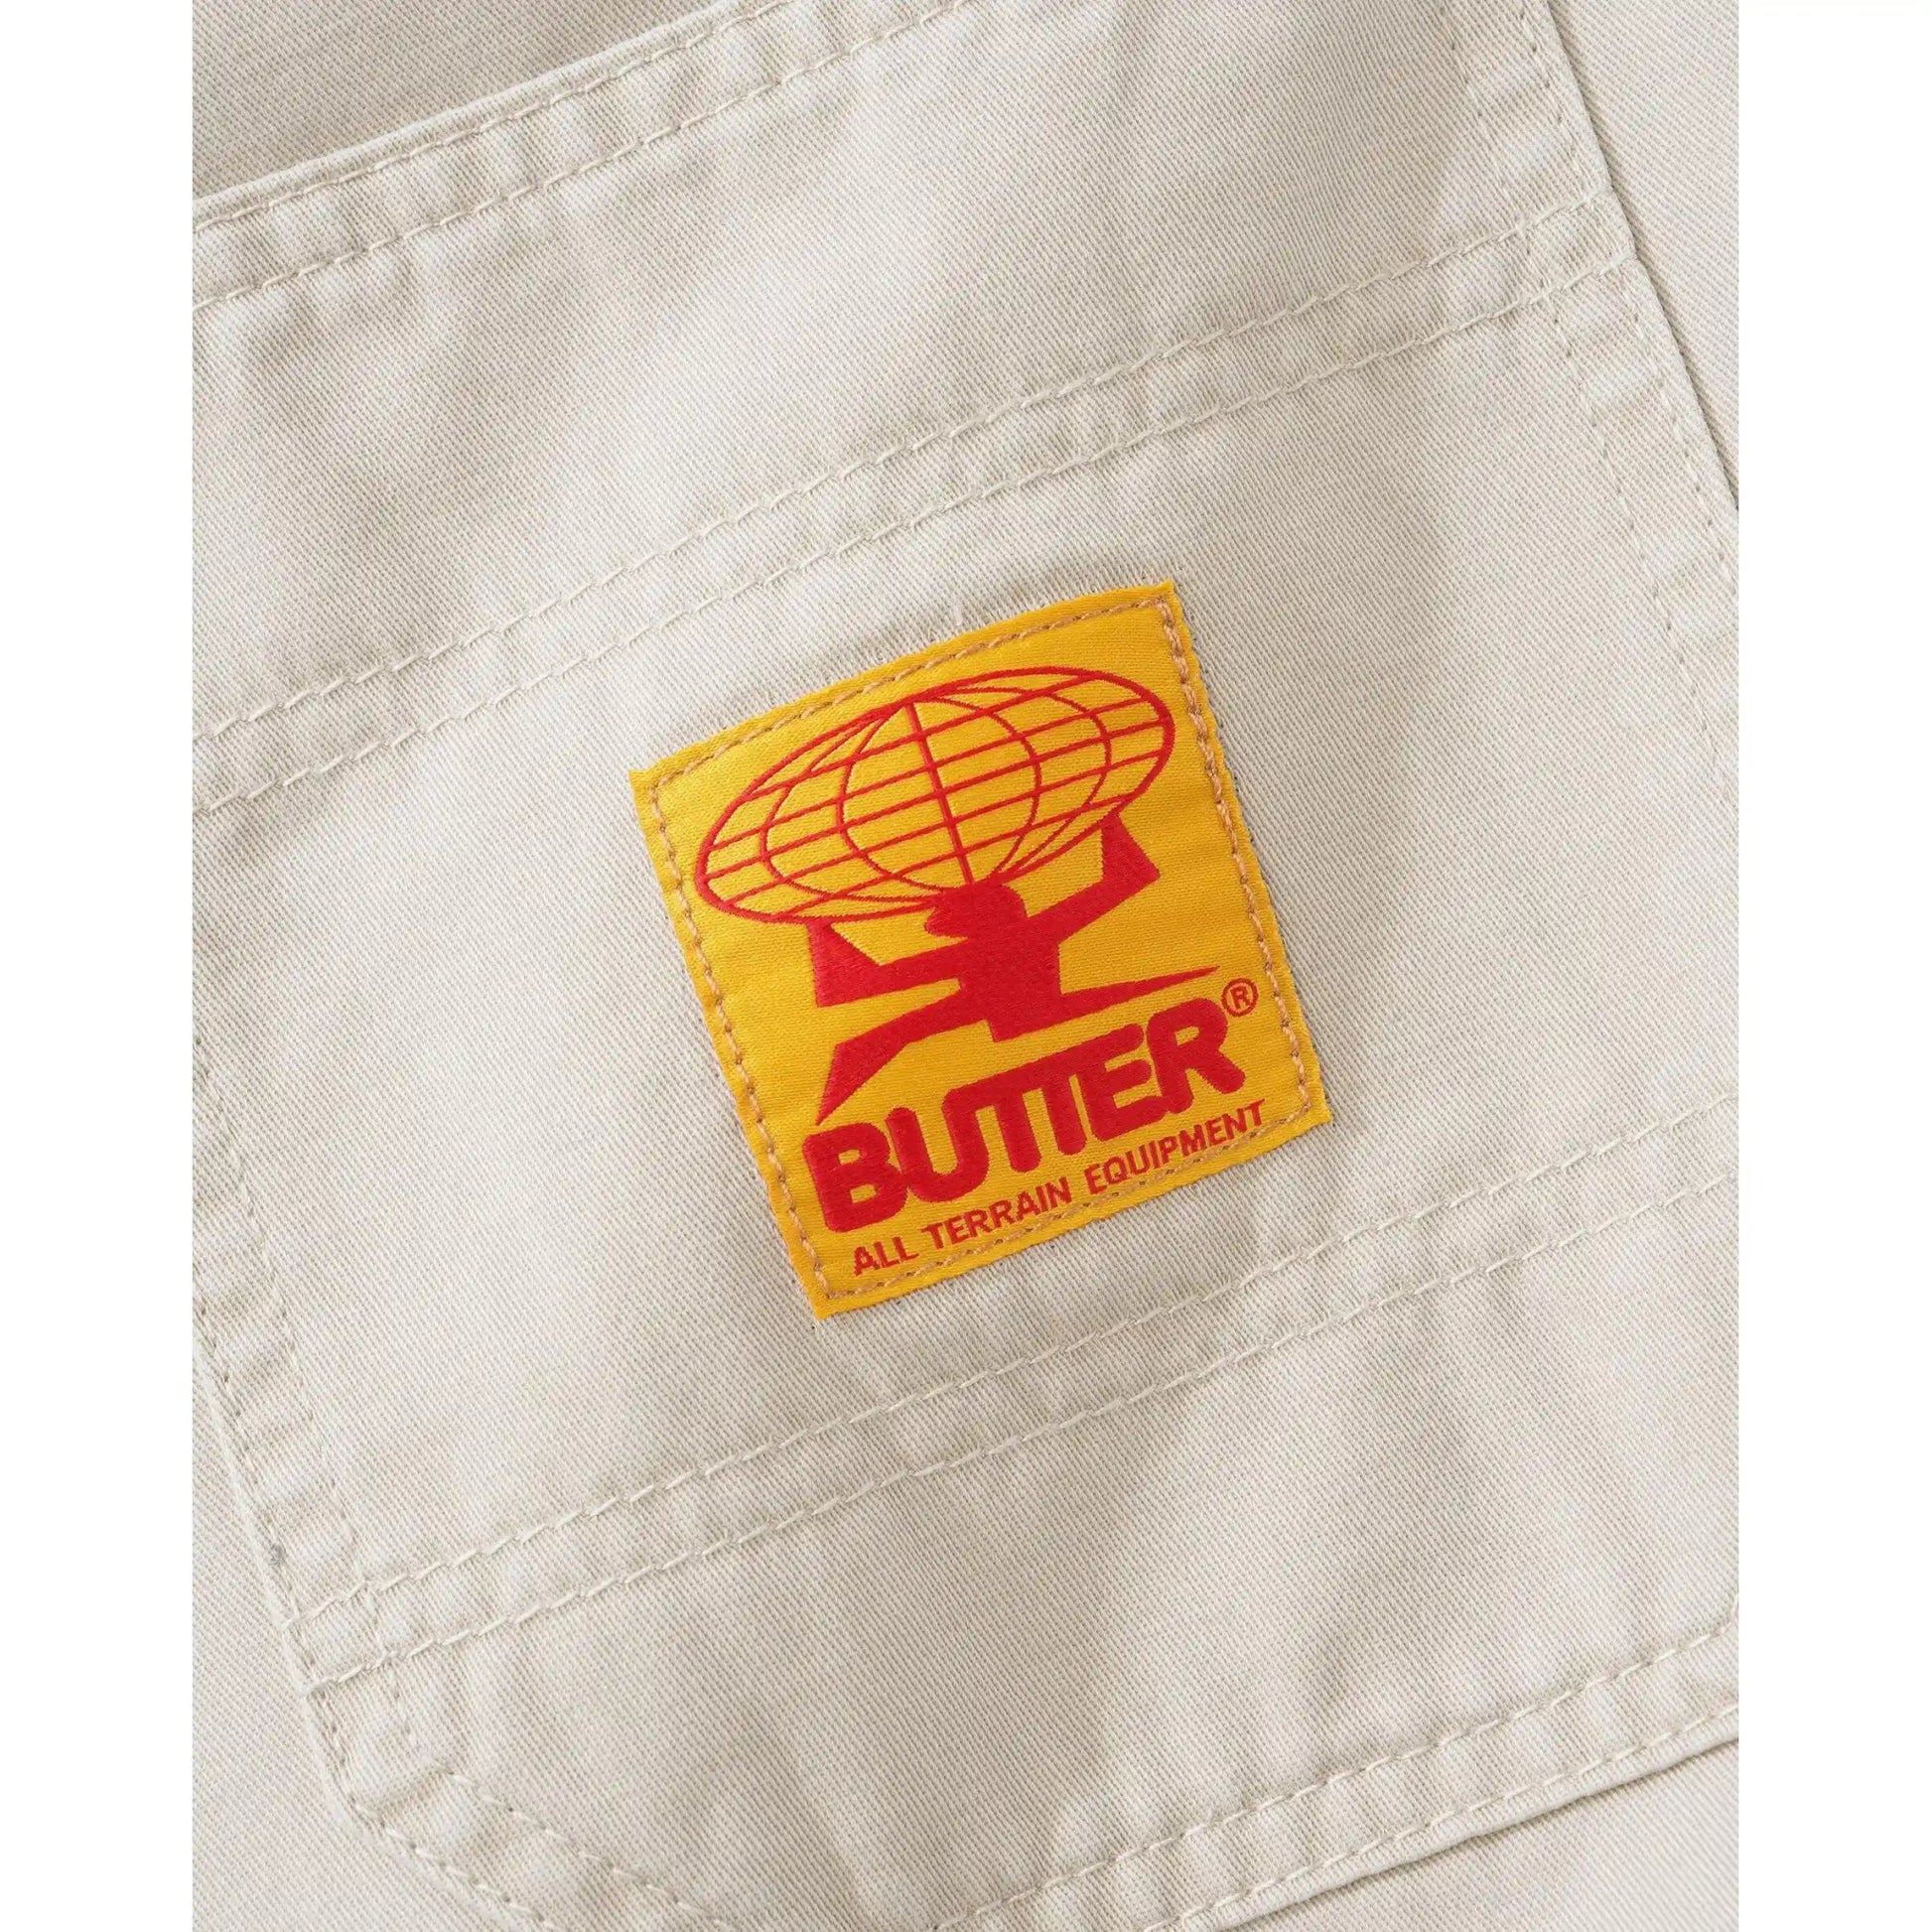 Butter Goods Field Cargo Pants, khaki - Tiki Room Skateboards - 3